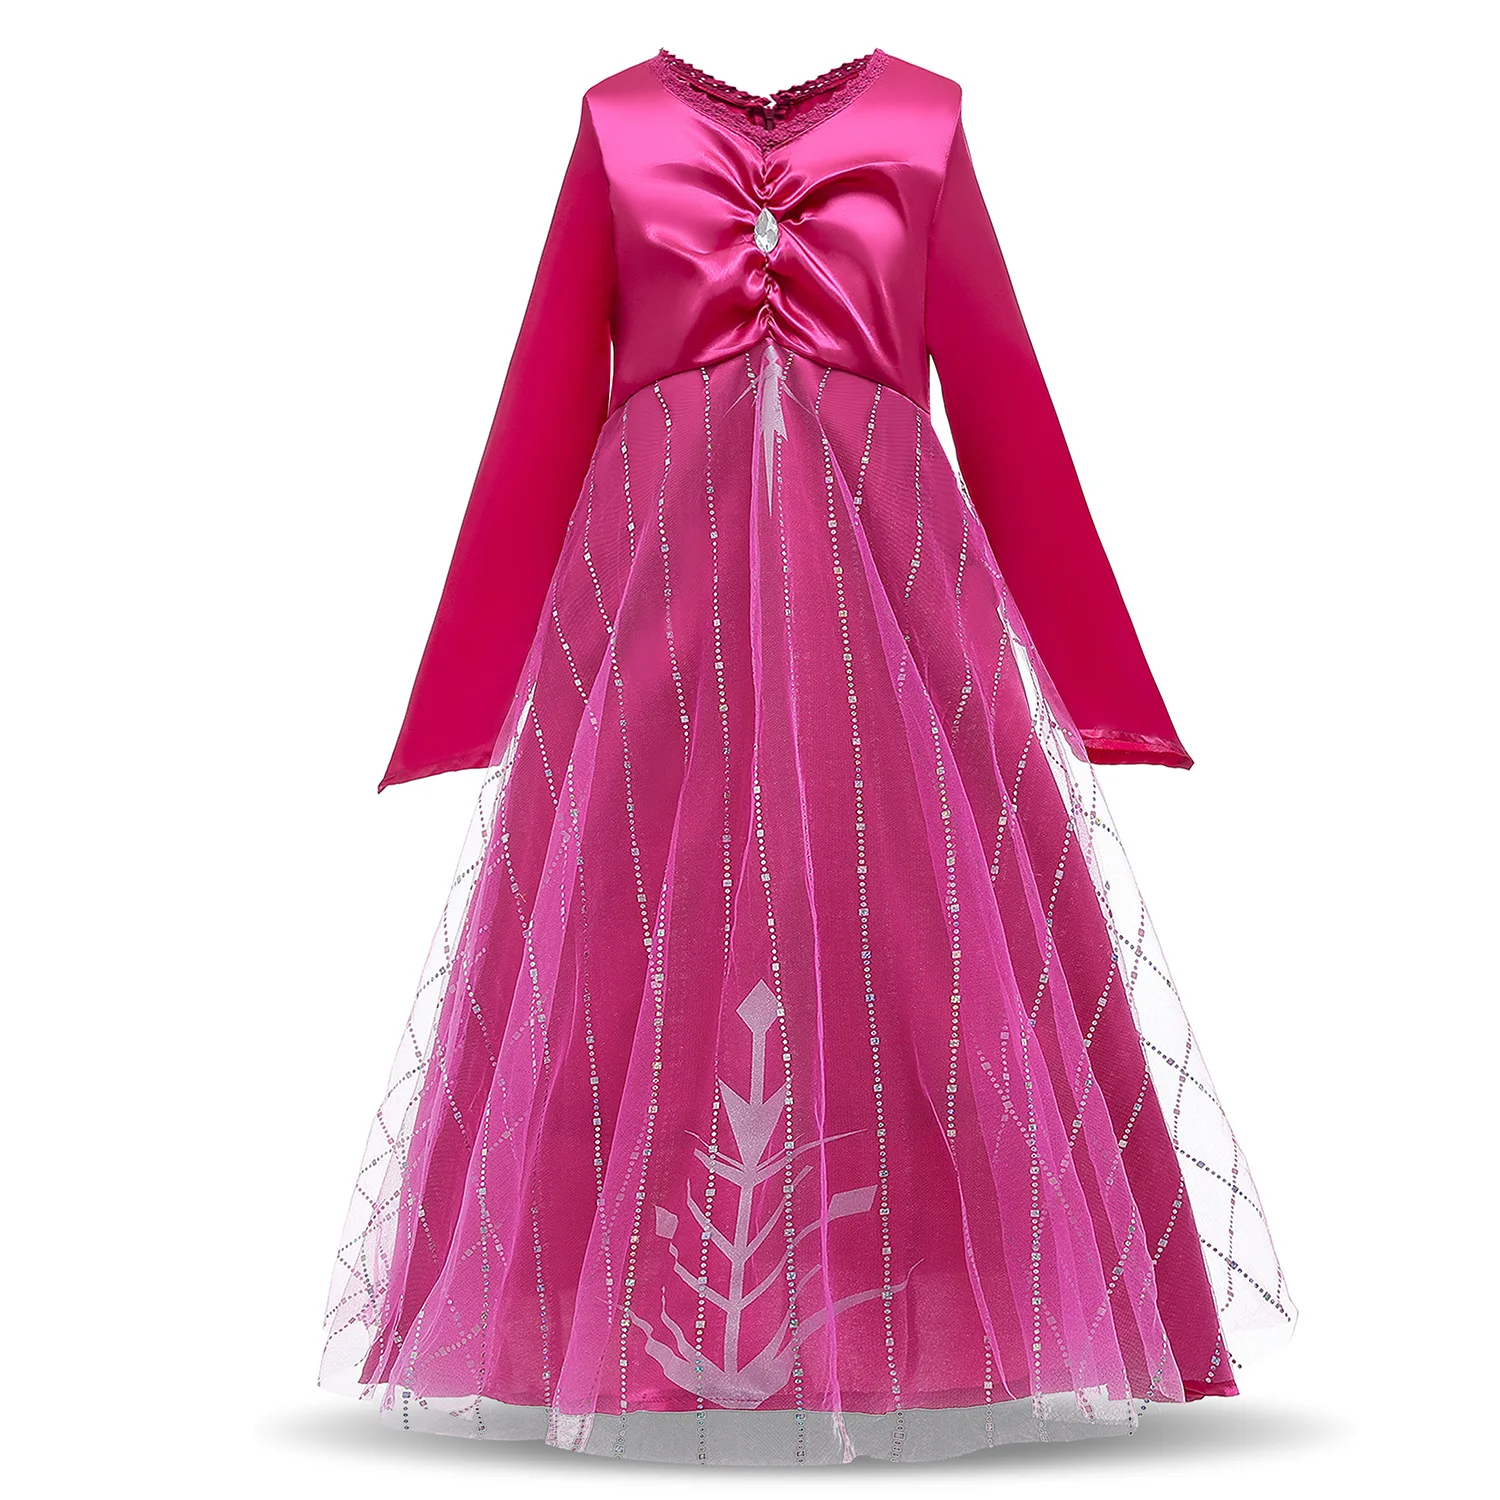 Details about   Kids Girls Snow Queen Anna Elsa Princess Long Sleeve Party Dress Gown Costume